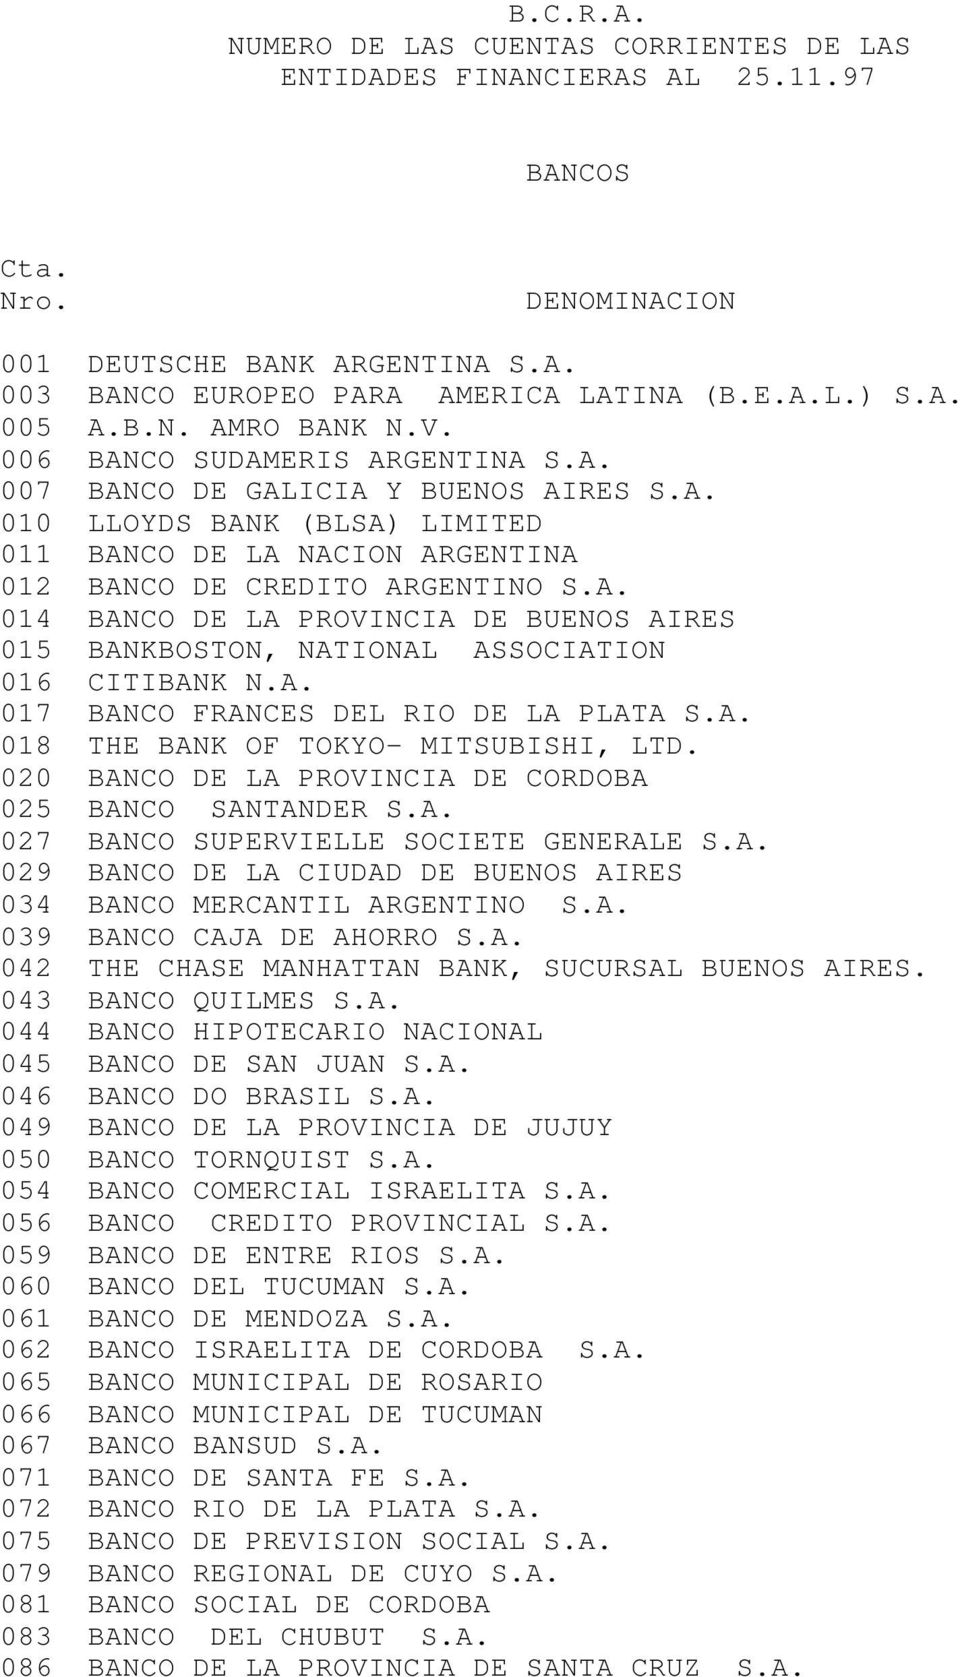 020 BANCO DE LA PROVINCIA DE CORDOBA 025 BANCO SANTANDER S.A. 027 BANCO SUPERVIELLE SOCIETE GENERALE S.A. 029 BANCO DE LA CIUDAD DE BUENOS AIRES 034 BANCO MERCANTIL ARGENTINO S.A. 039 BANCO CAJA DE AHORRO S.